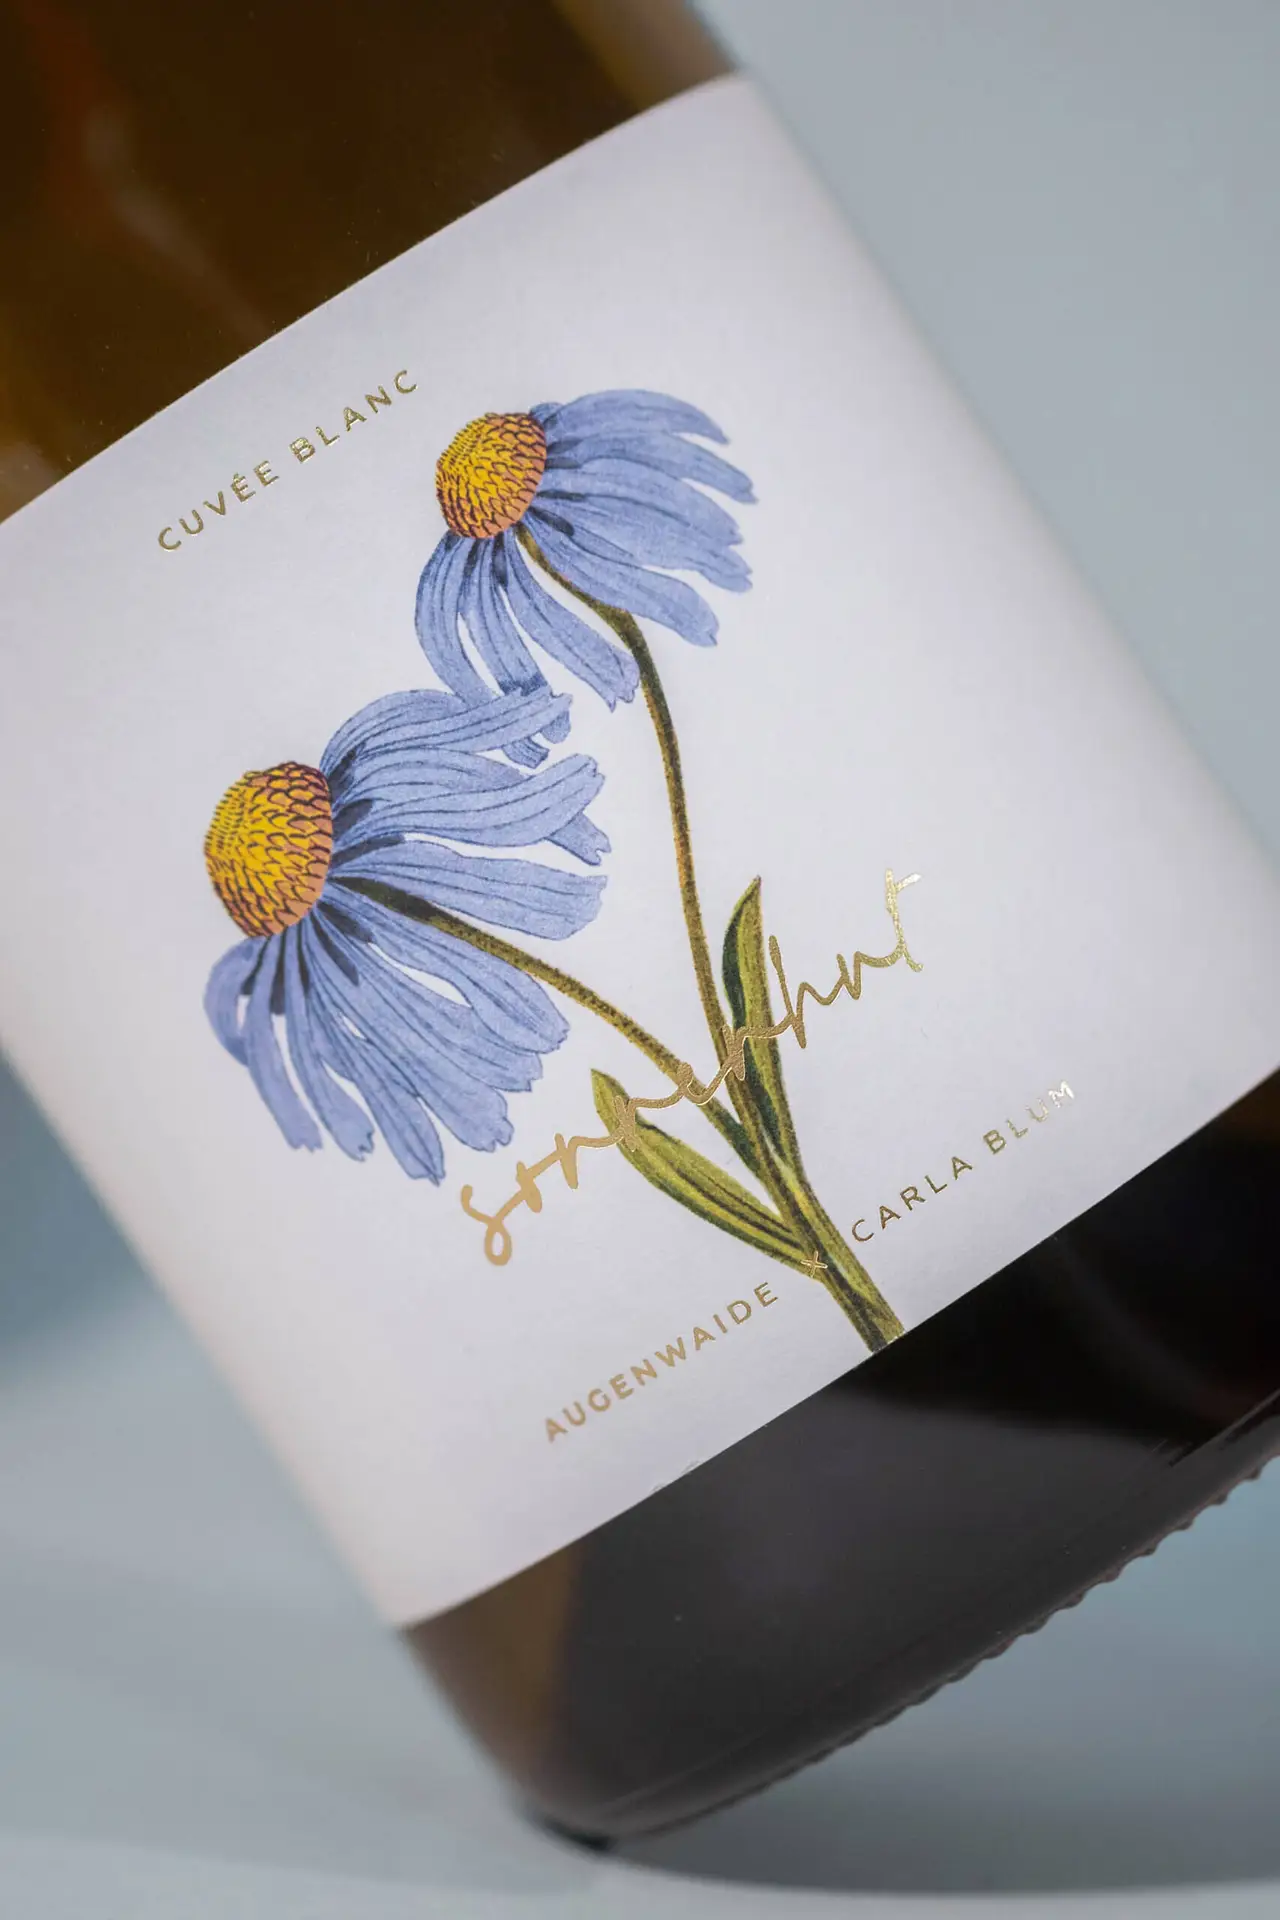 Mona-Wingerter-portfolio-grafiker-grafikdesigner-freelance-art-director-Wine-winebottle-packagingdesign-label-labeldesign-logo-brand-design-Flower-Augenwaide-Carla-Blum-7